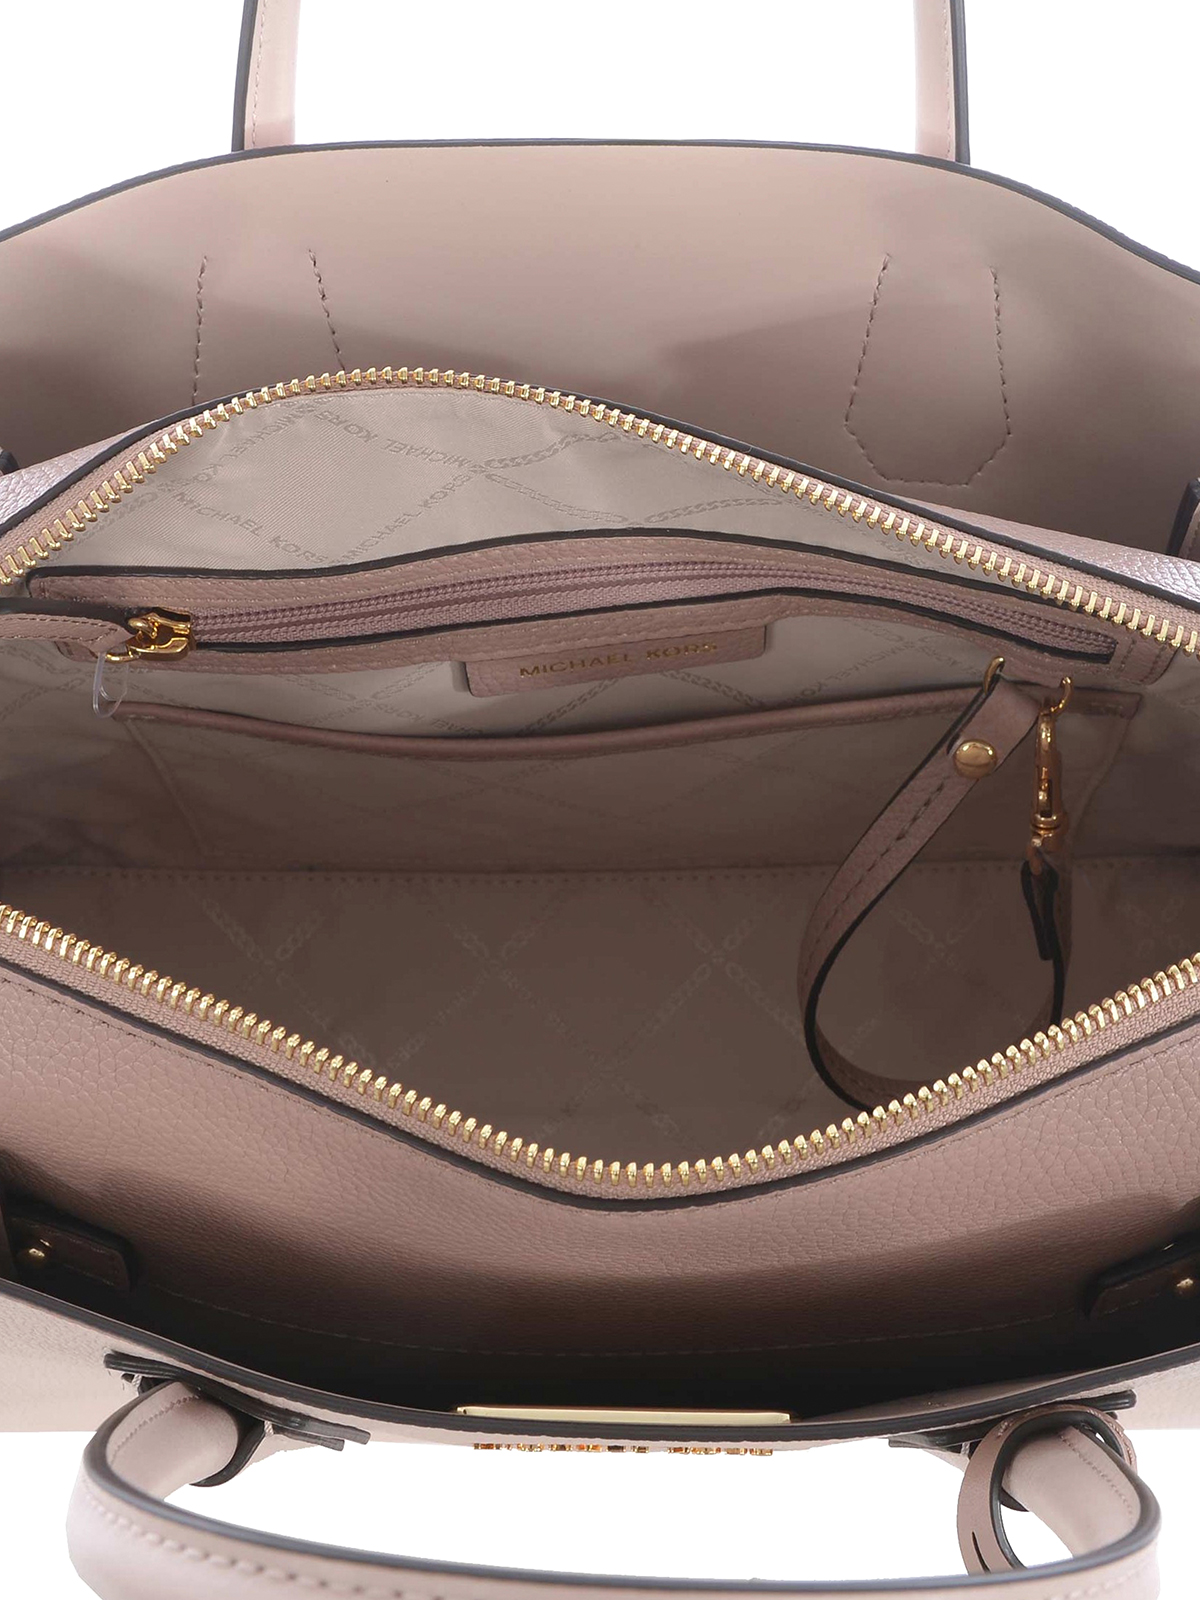 Totes bags Michael Kors - Mercer medium pink hammered leather tote bag -  30S9GM9S2T690